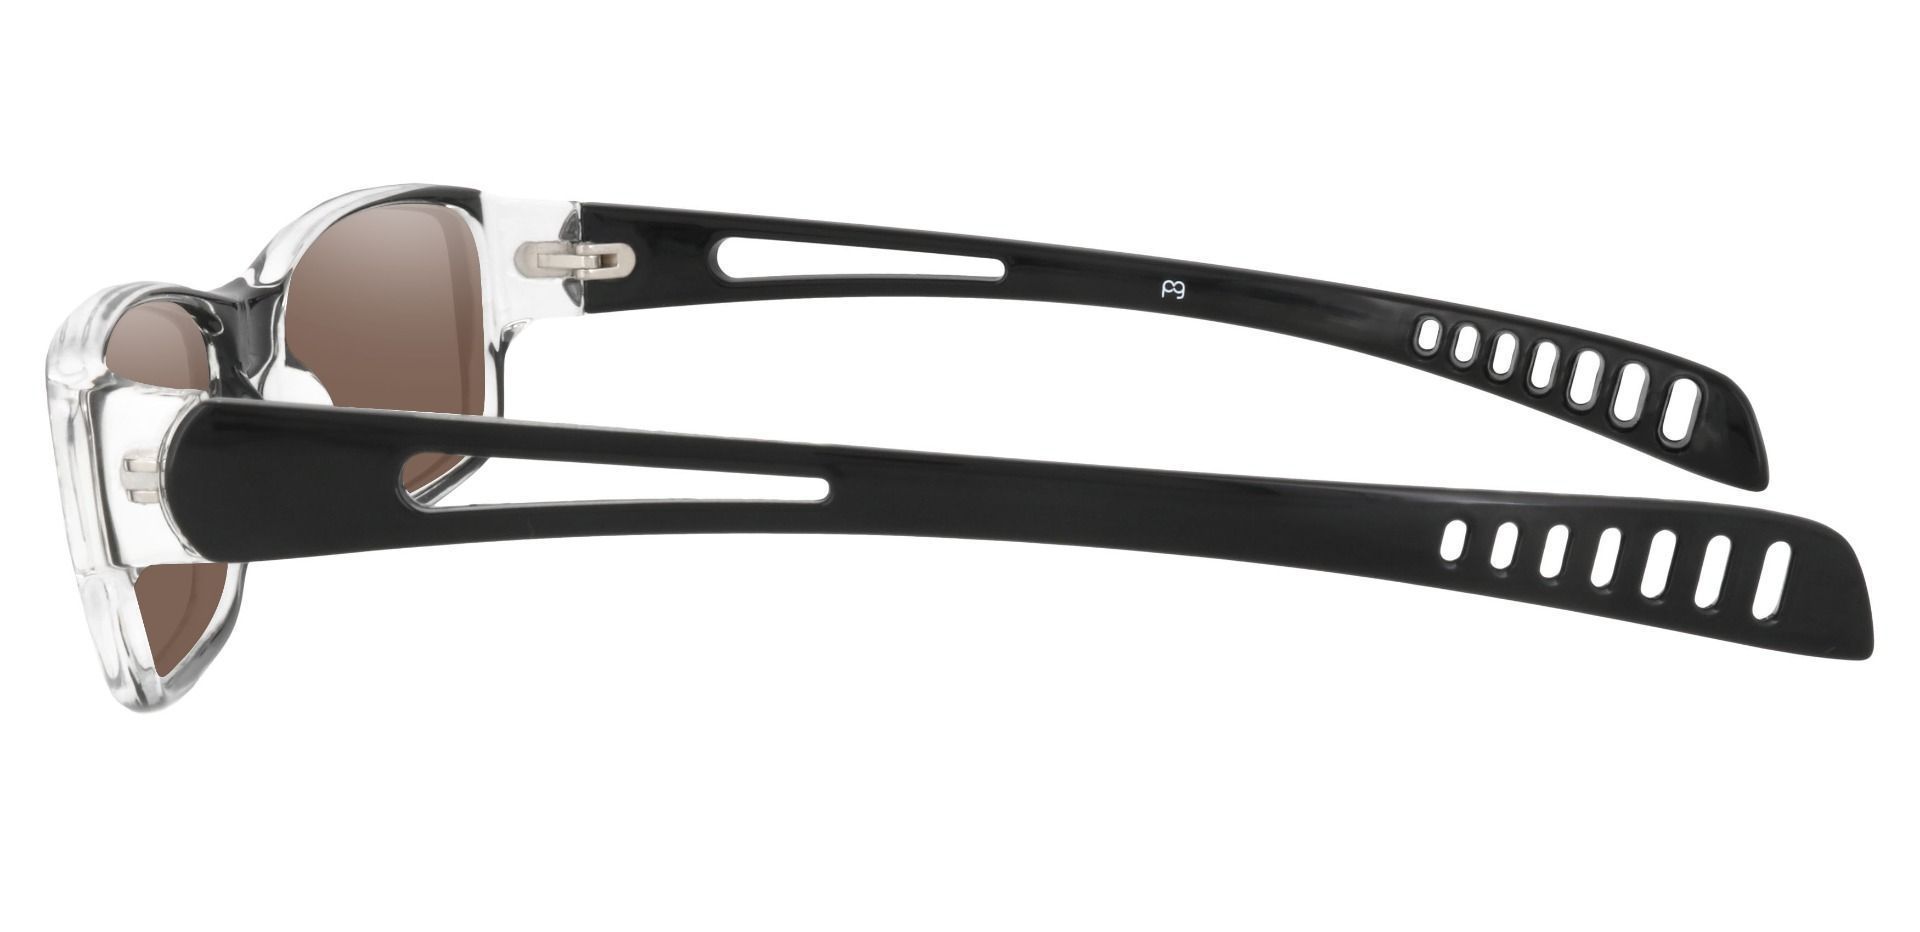 Mercury Rectangle Prescription Sunglasses - Black Frame With Brown Lenses